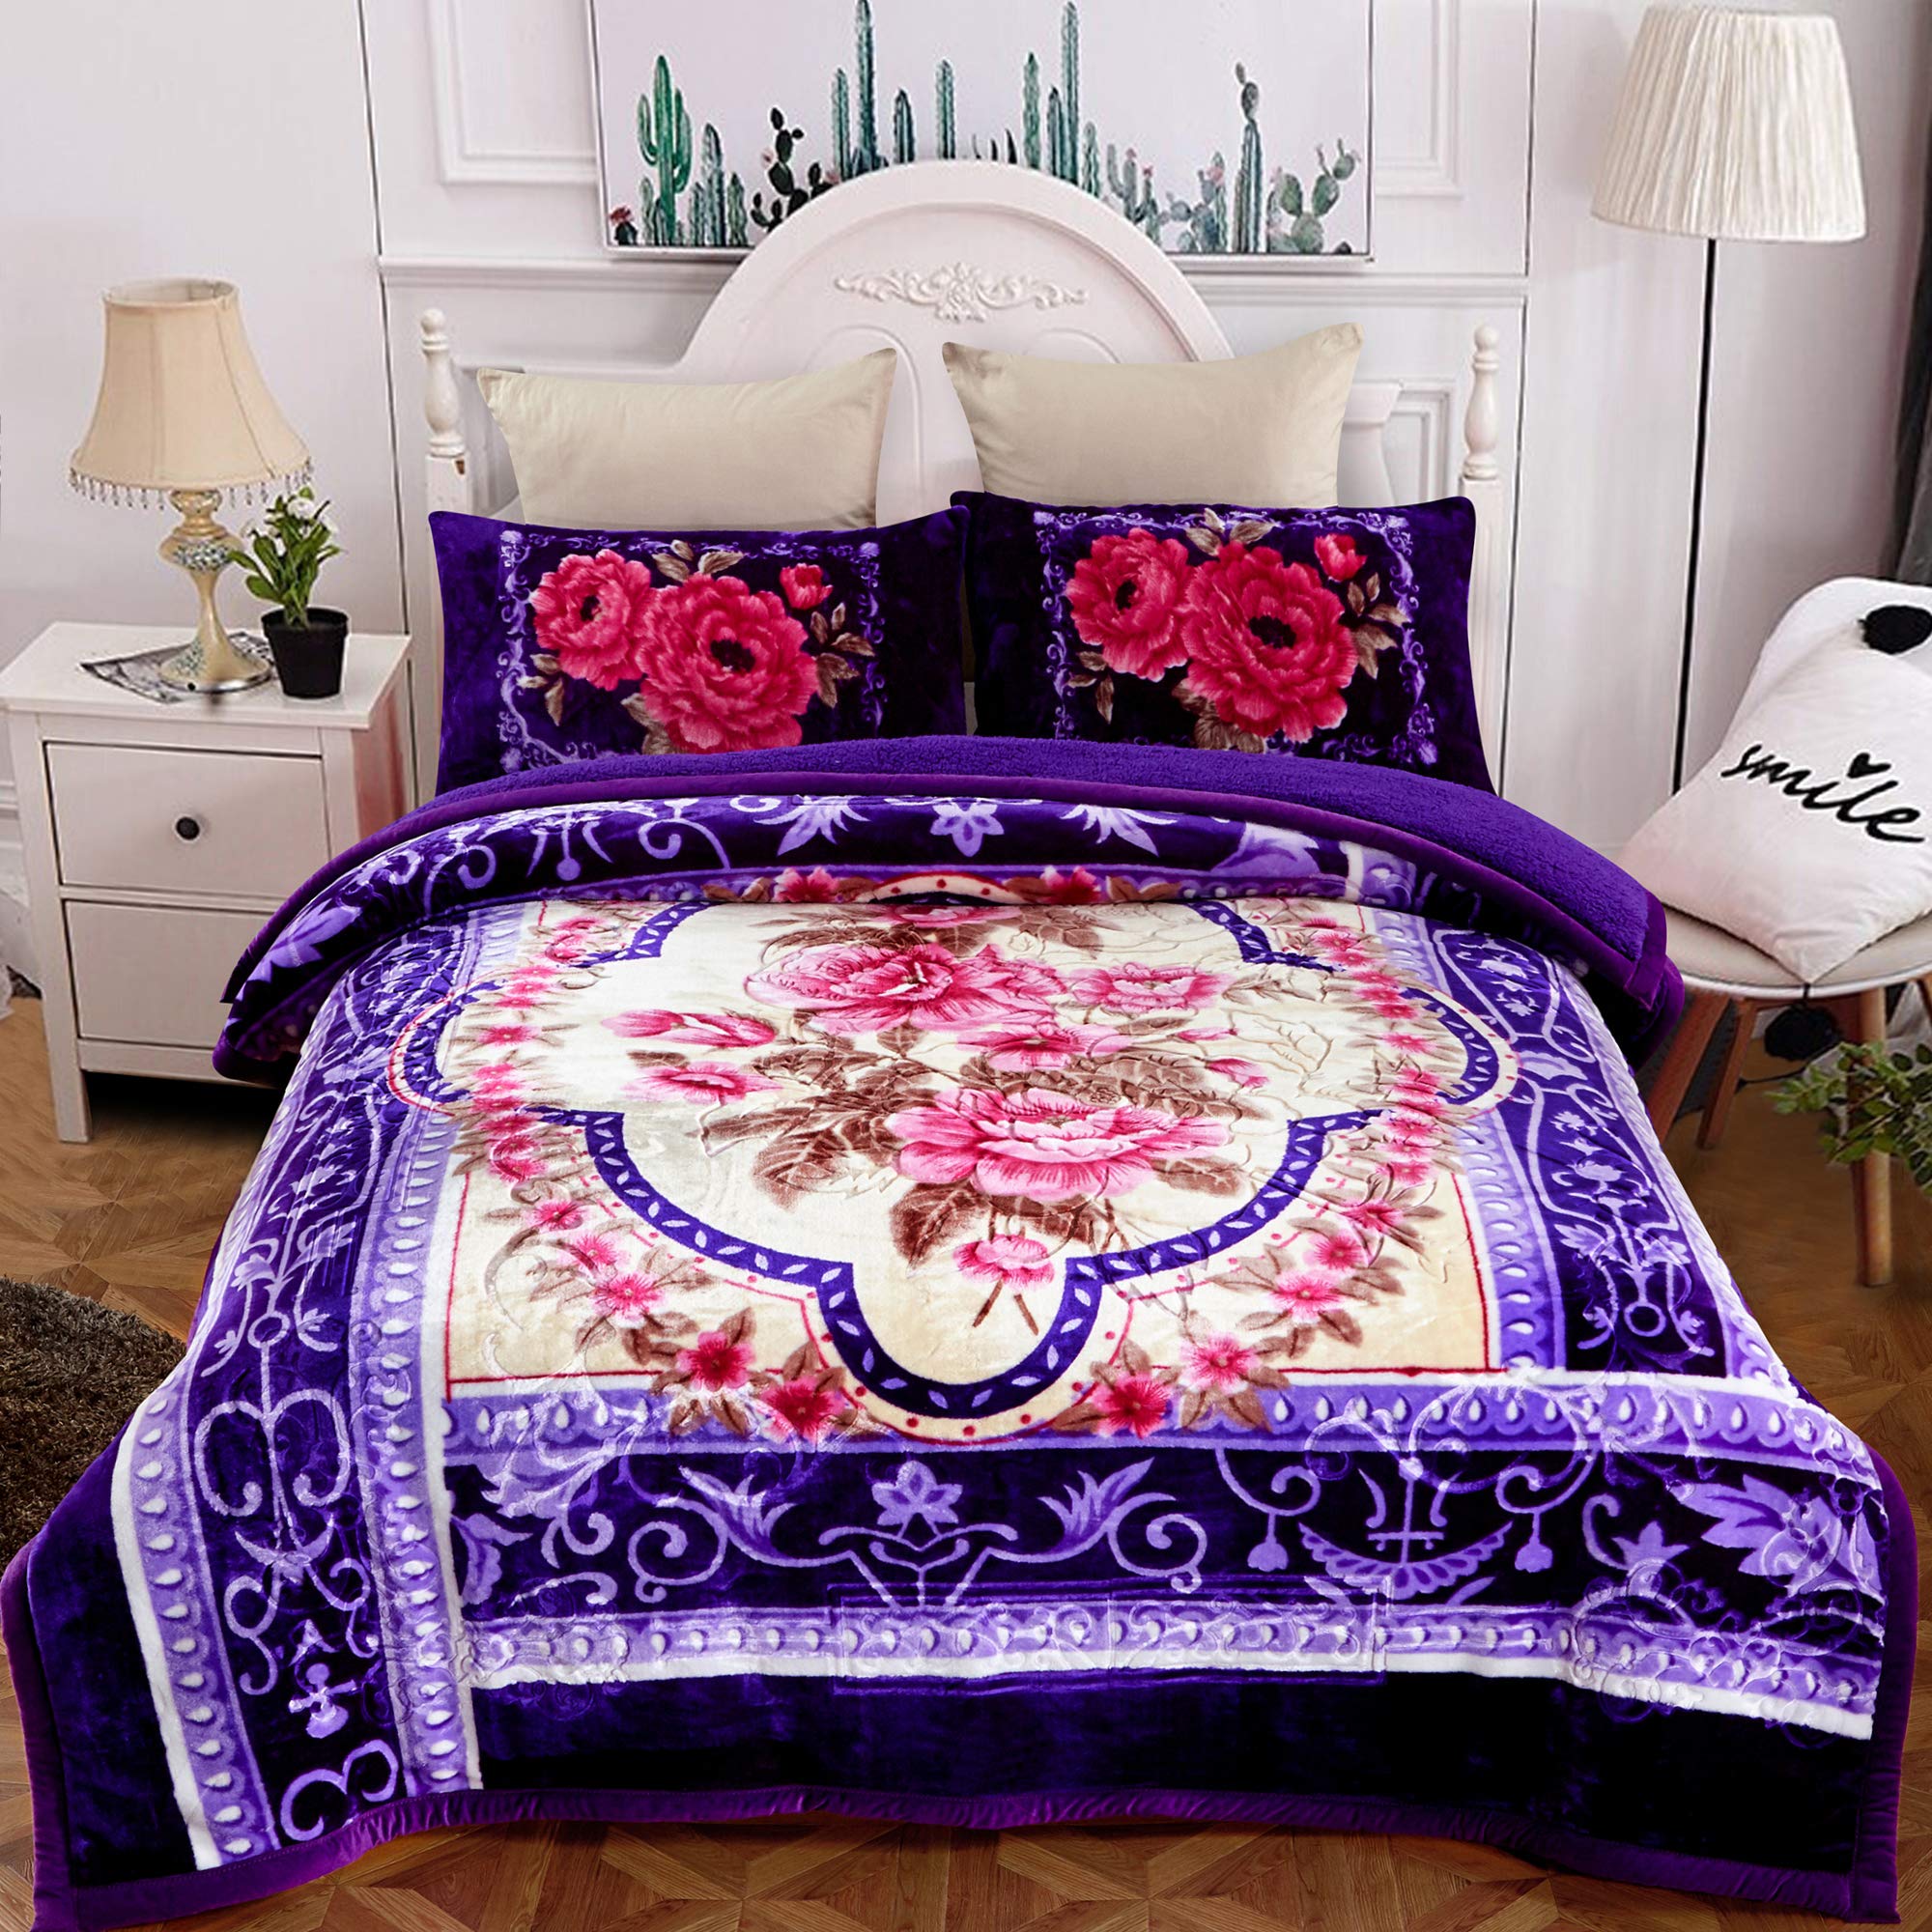 JML Sherpa Flannel Blanket, 3-Piece Fleece Blanket with Pillow Shams- Soft, Warm, Korean Style Printed Embossed Bed Blanket, Purple